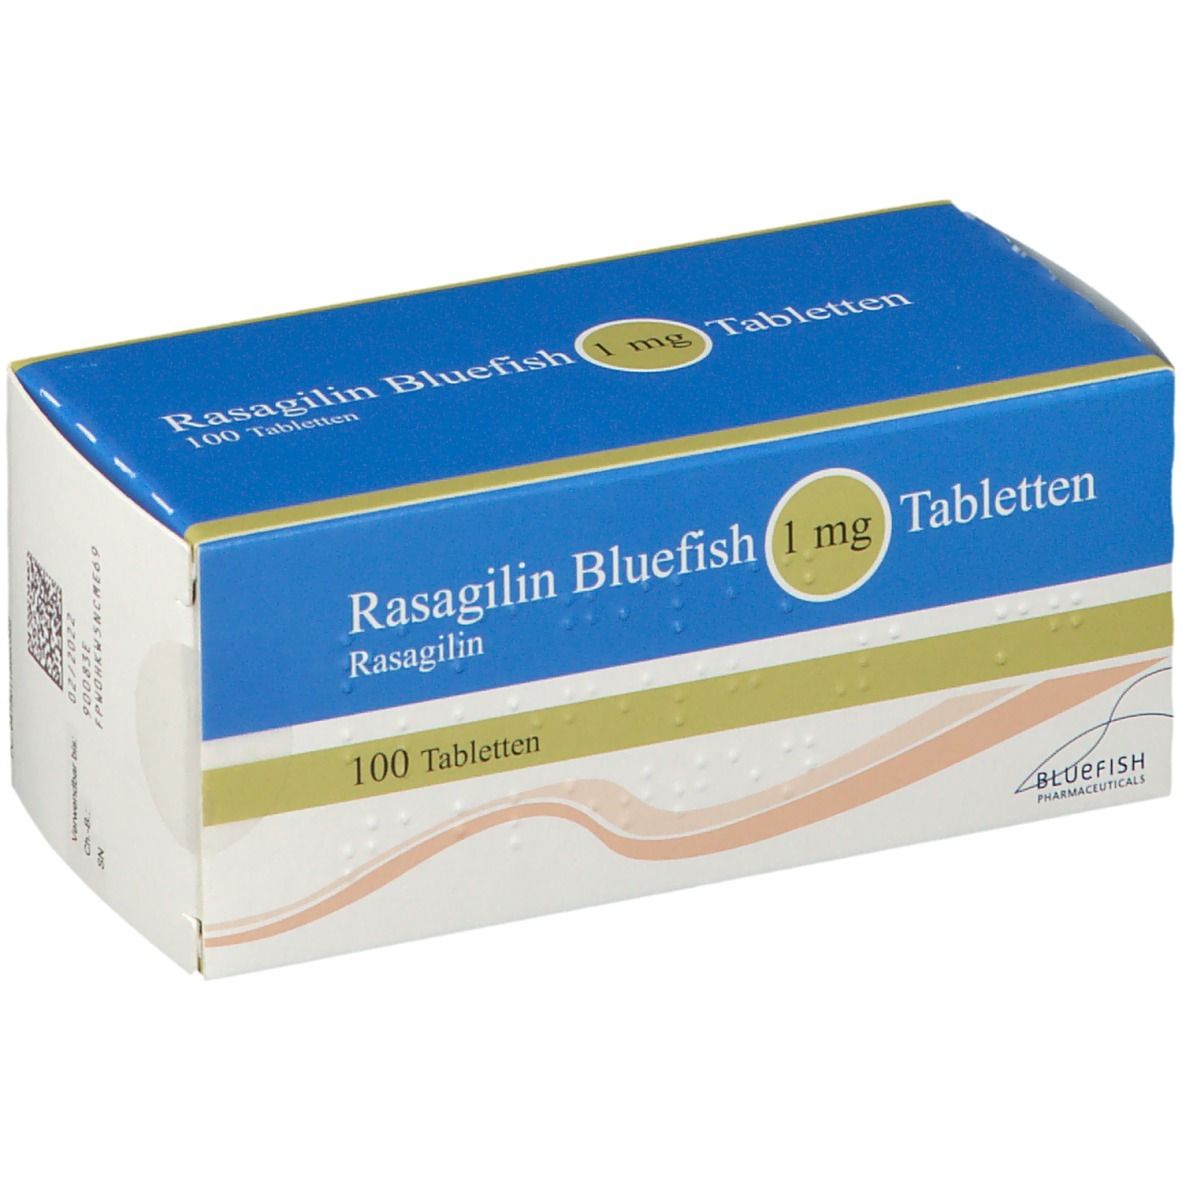 Rasagilin Bluefish 1 mg